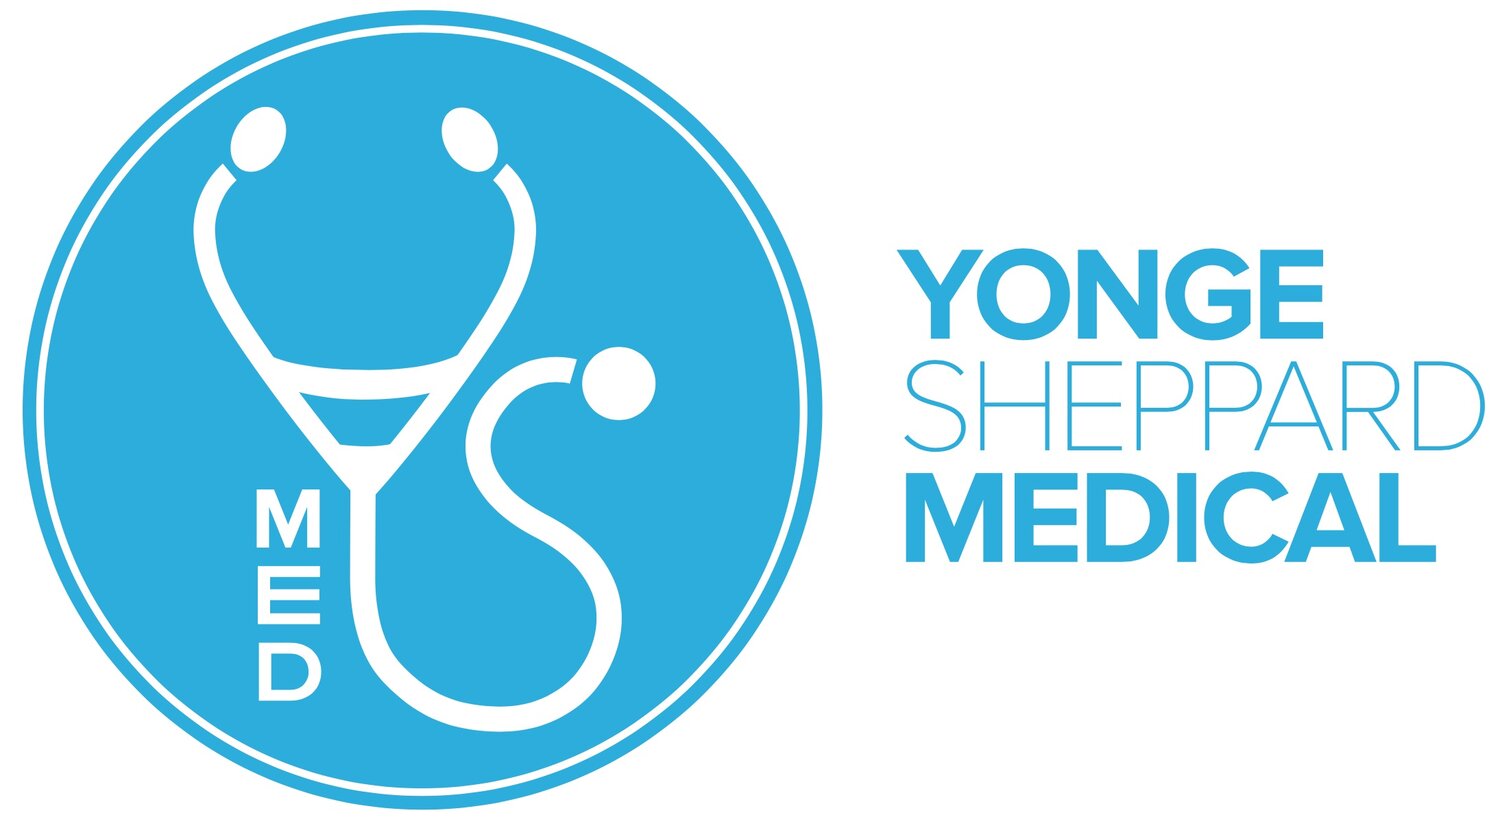 Yonge Sheppard Medical